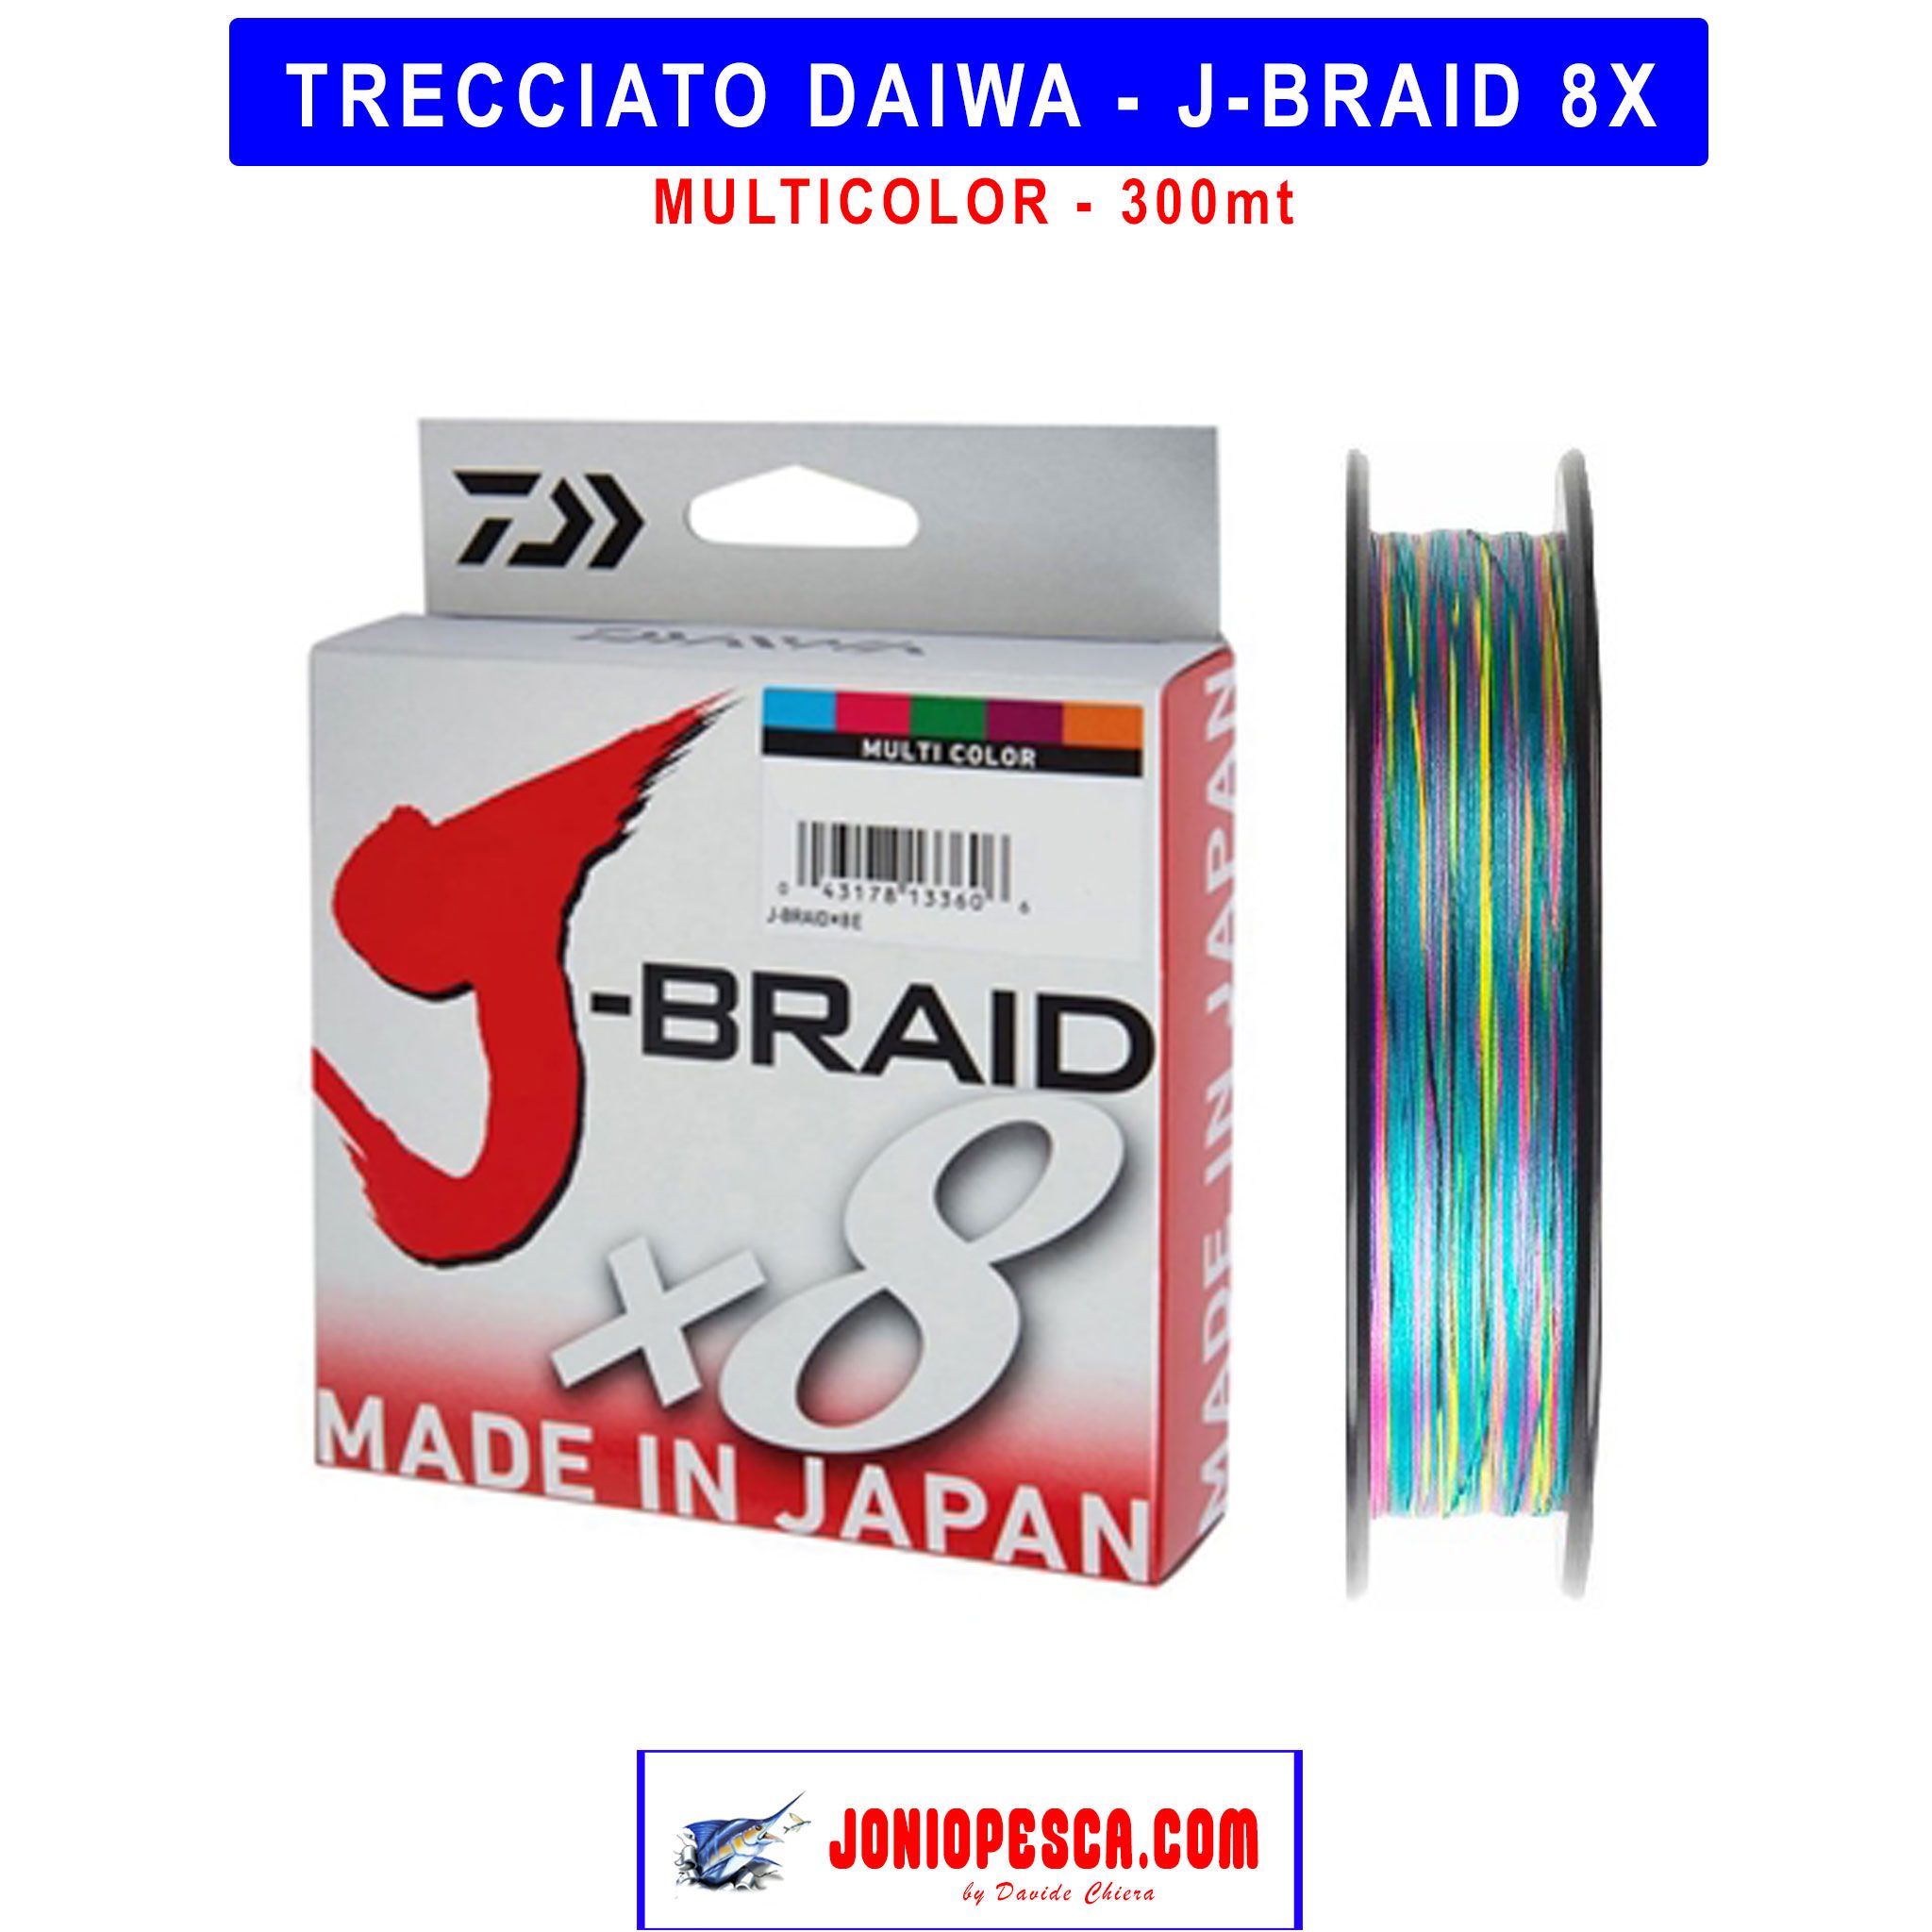 TRECCIATO DAIWA J-BRAID 8X - MULTICOLOR - 300mt - Jonio Pesca